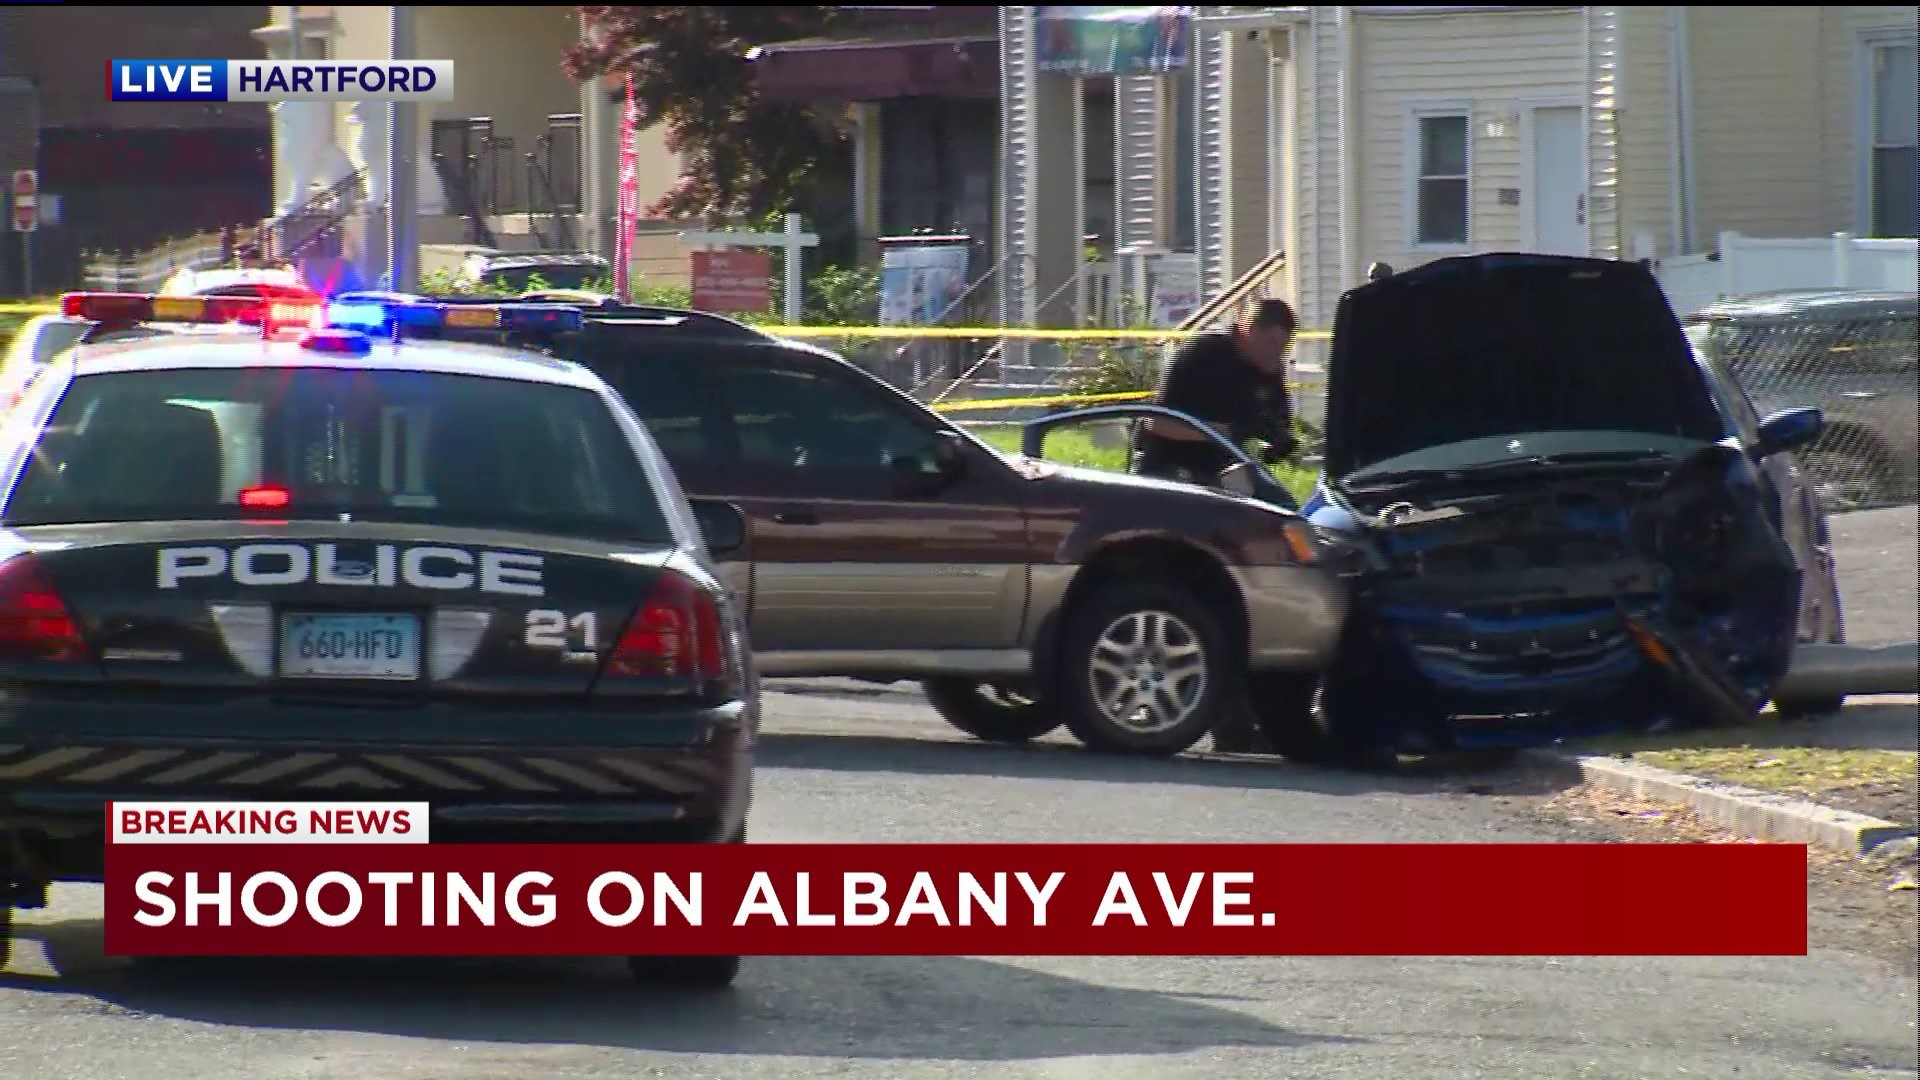 Hartford shooting on Albany Ave May 21